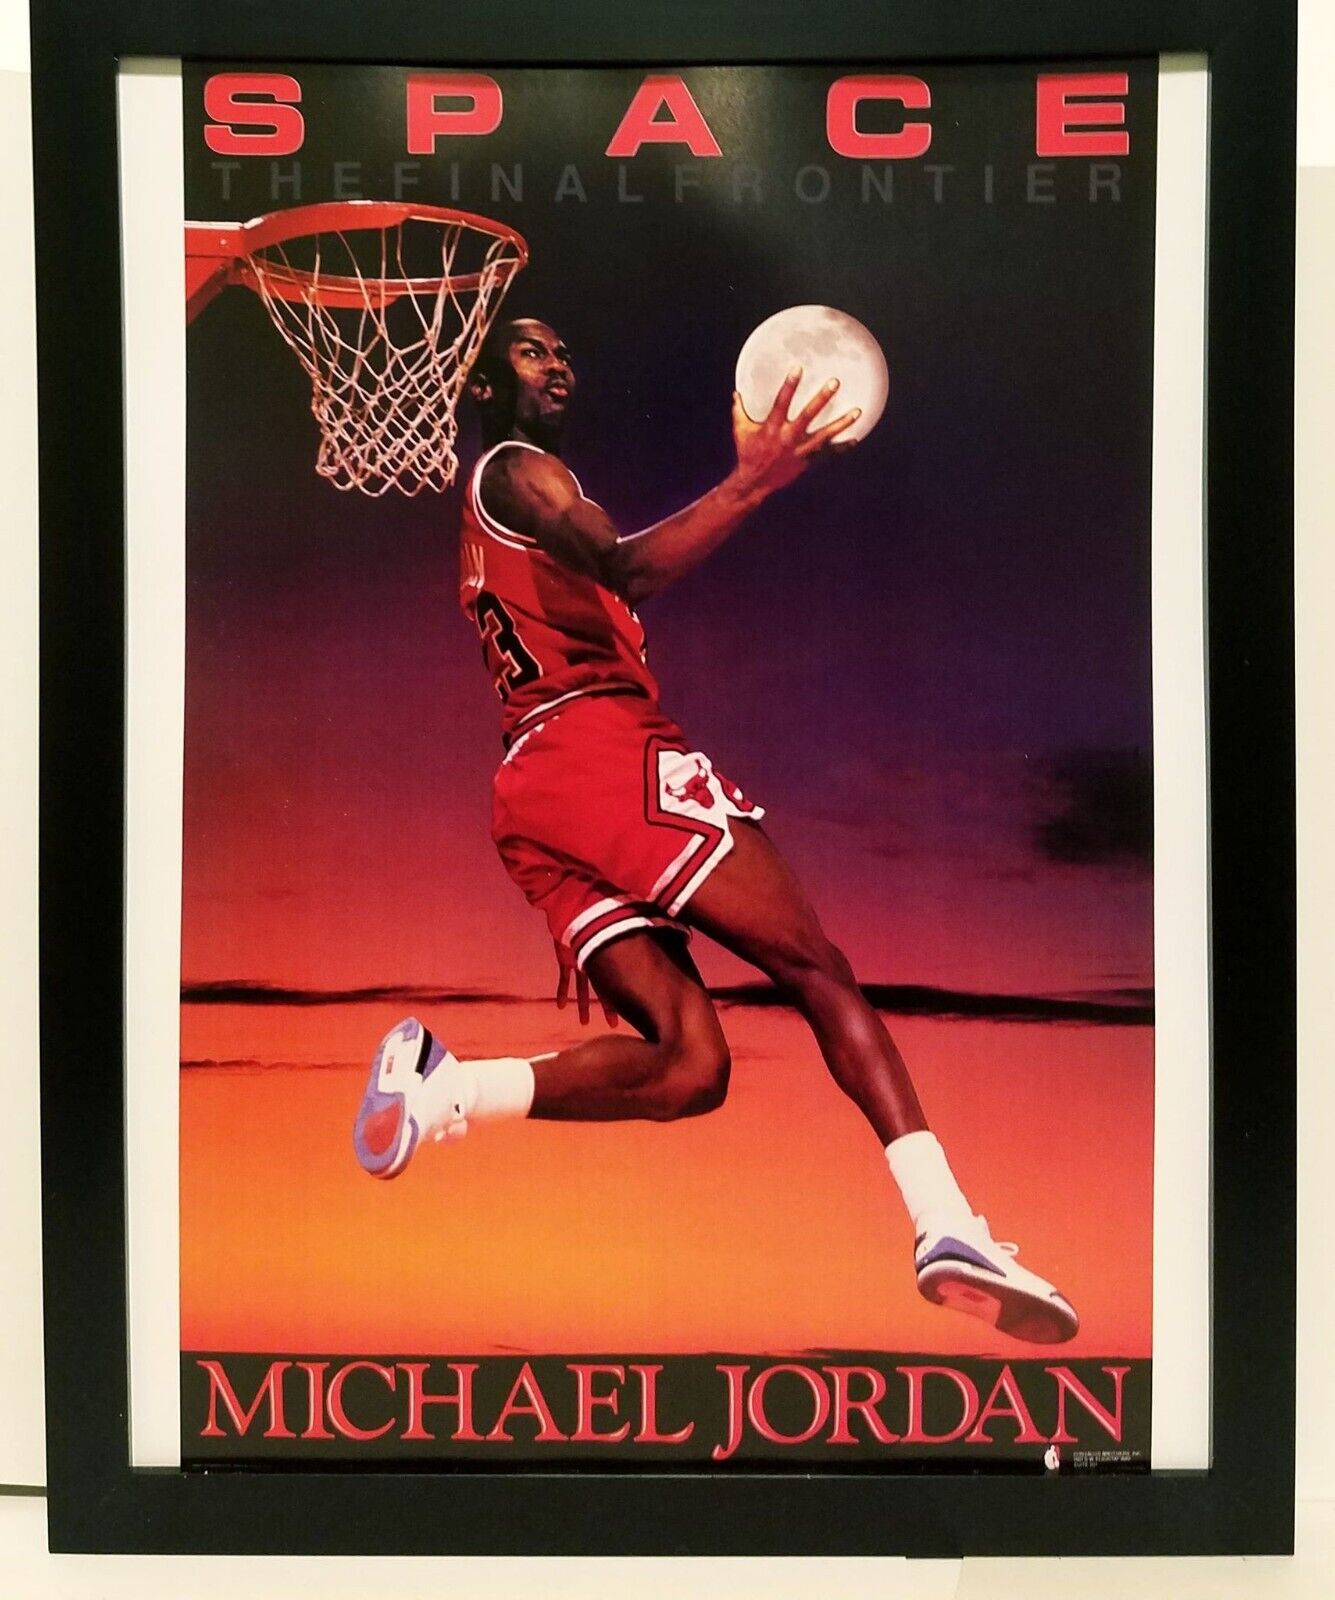 Michael Jordan Space Costacos Brothers 8.5x11 FRAMED Print Vintage 80s Poster